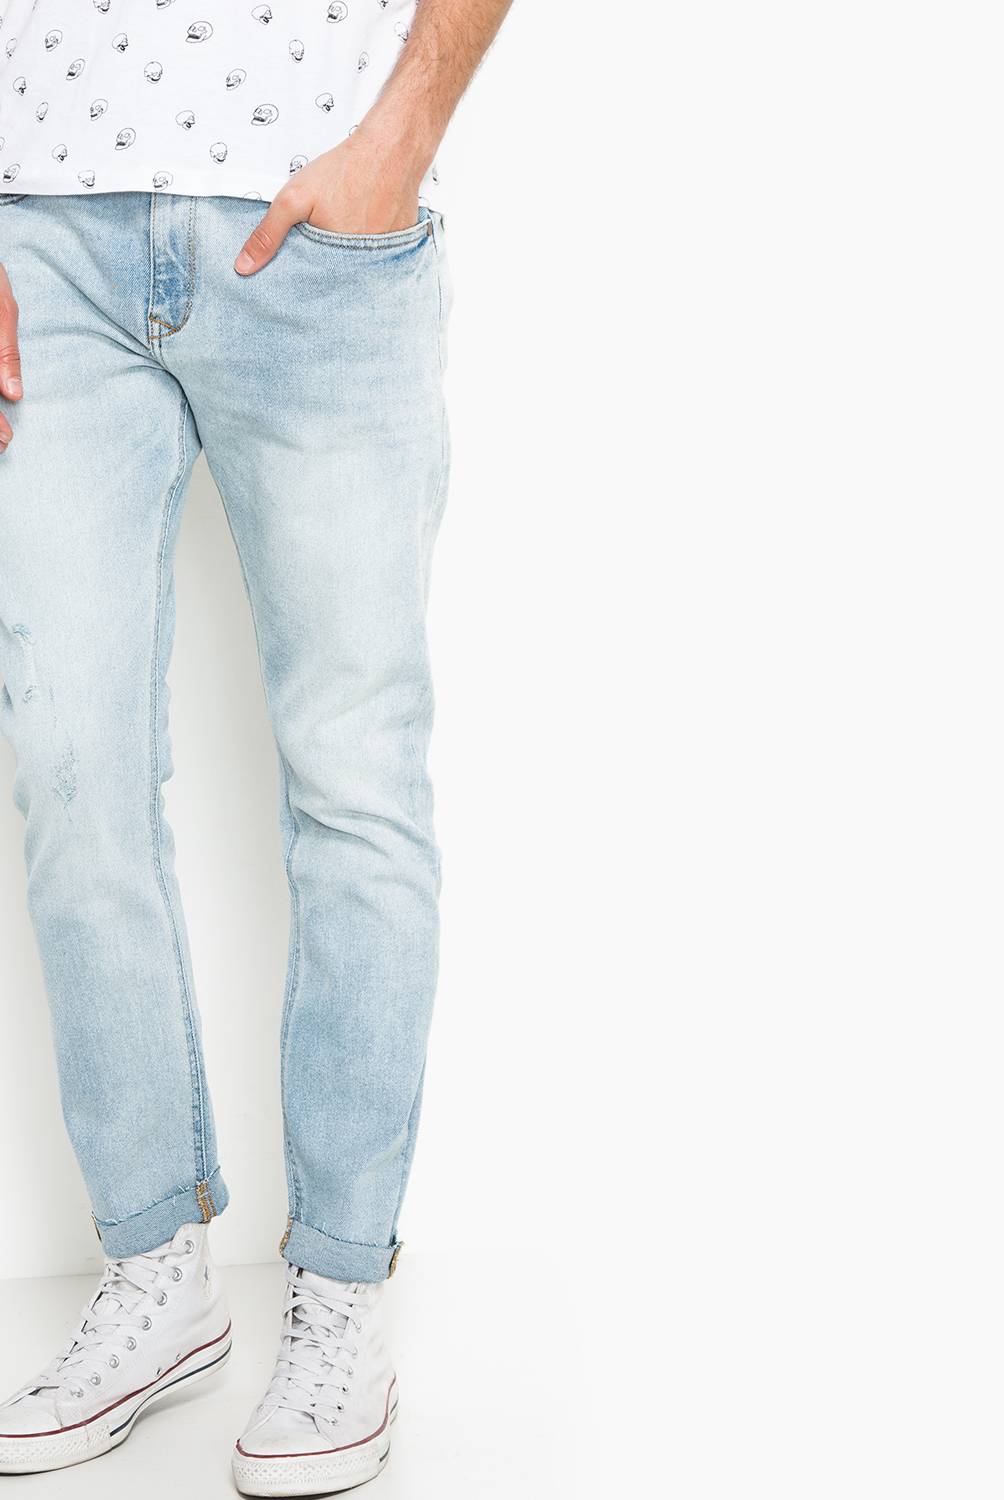 Wrangler - Jeans Casual